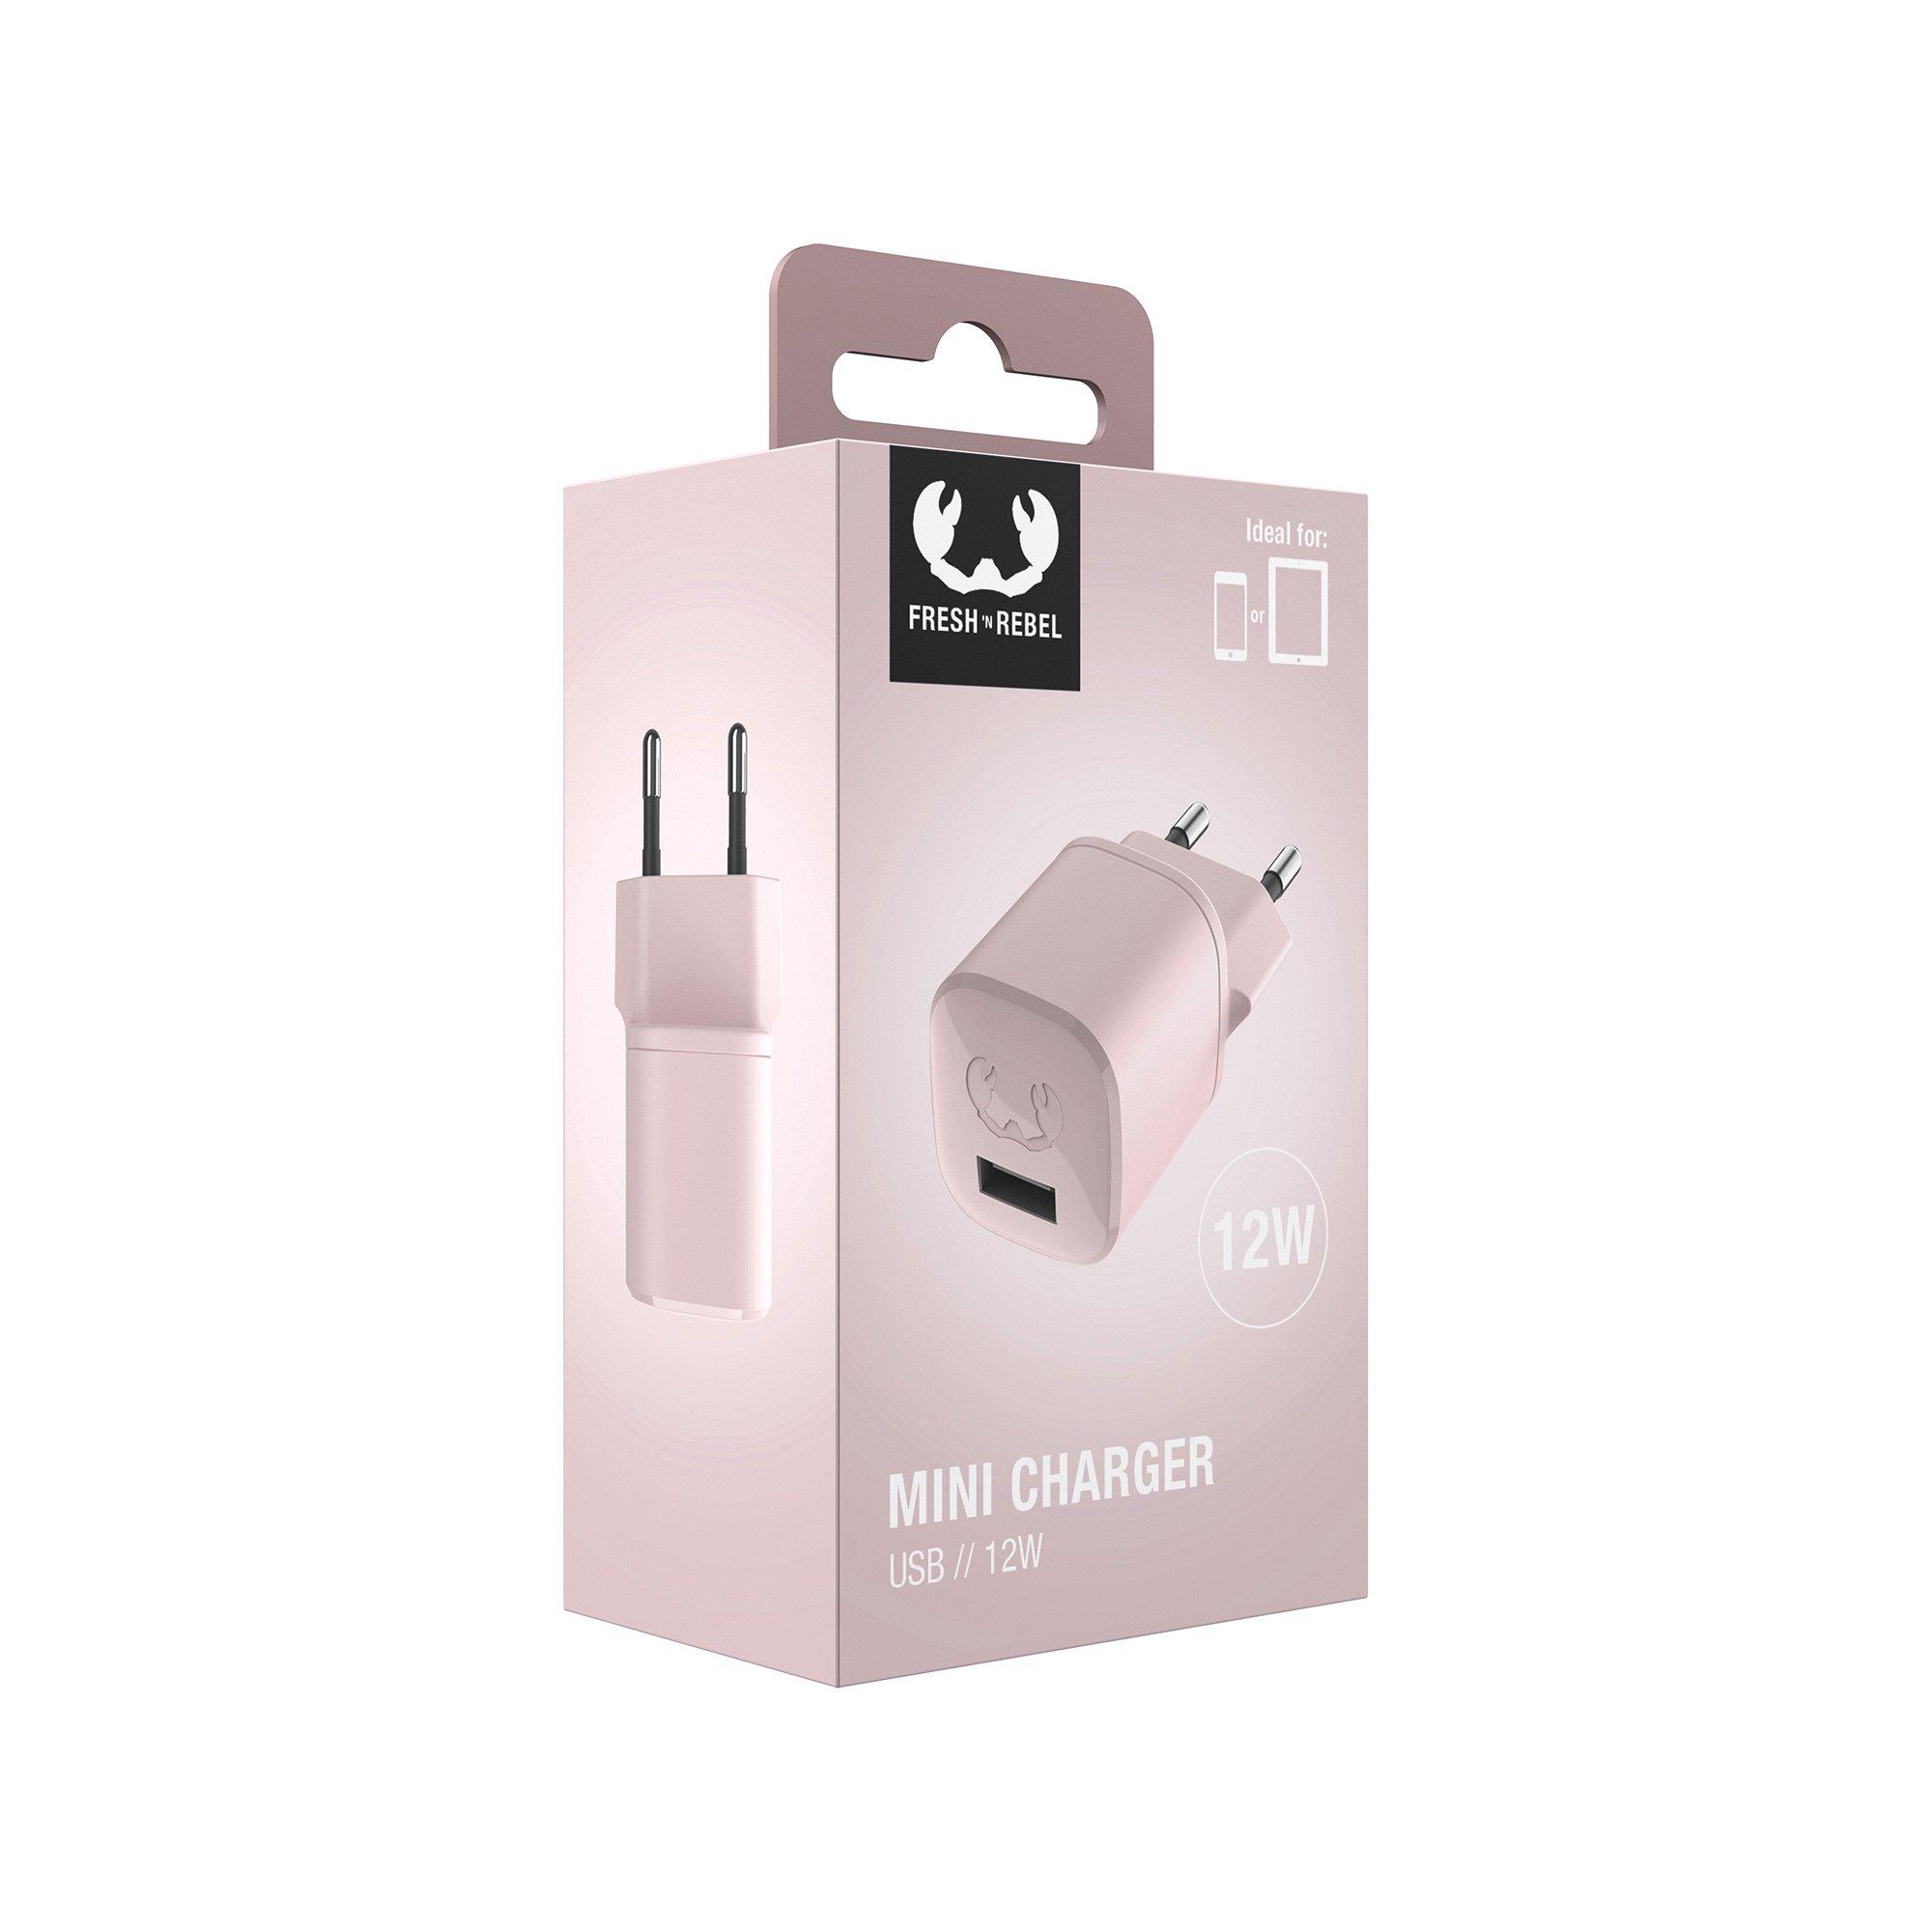 FRESH'N REBEL Mini Charger USB-A 12W USB Charger
 